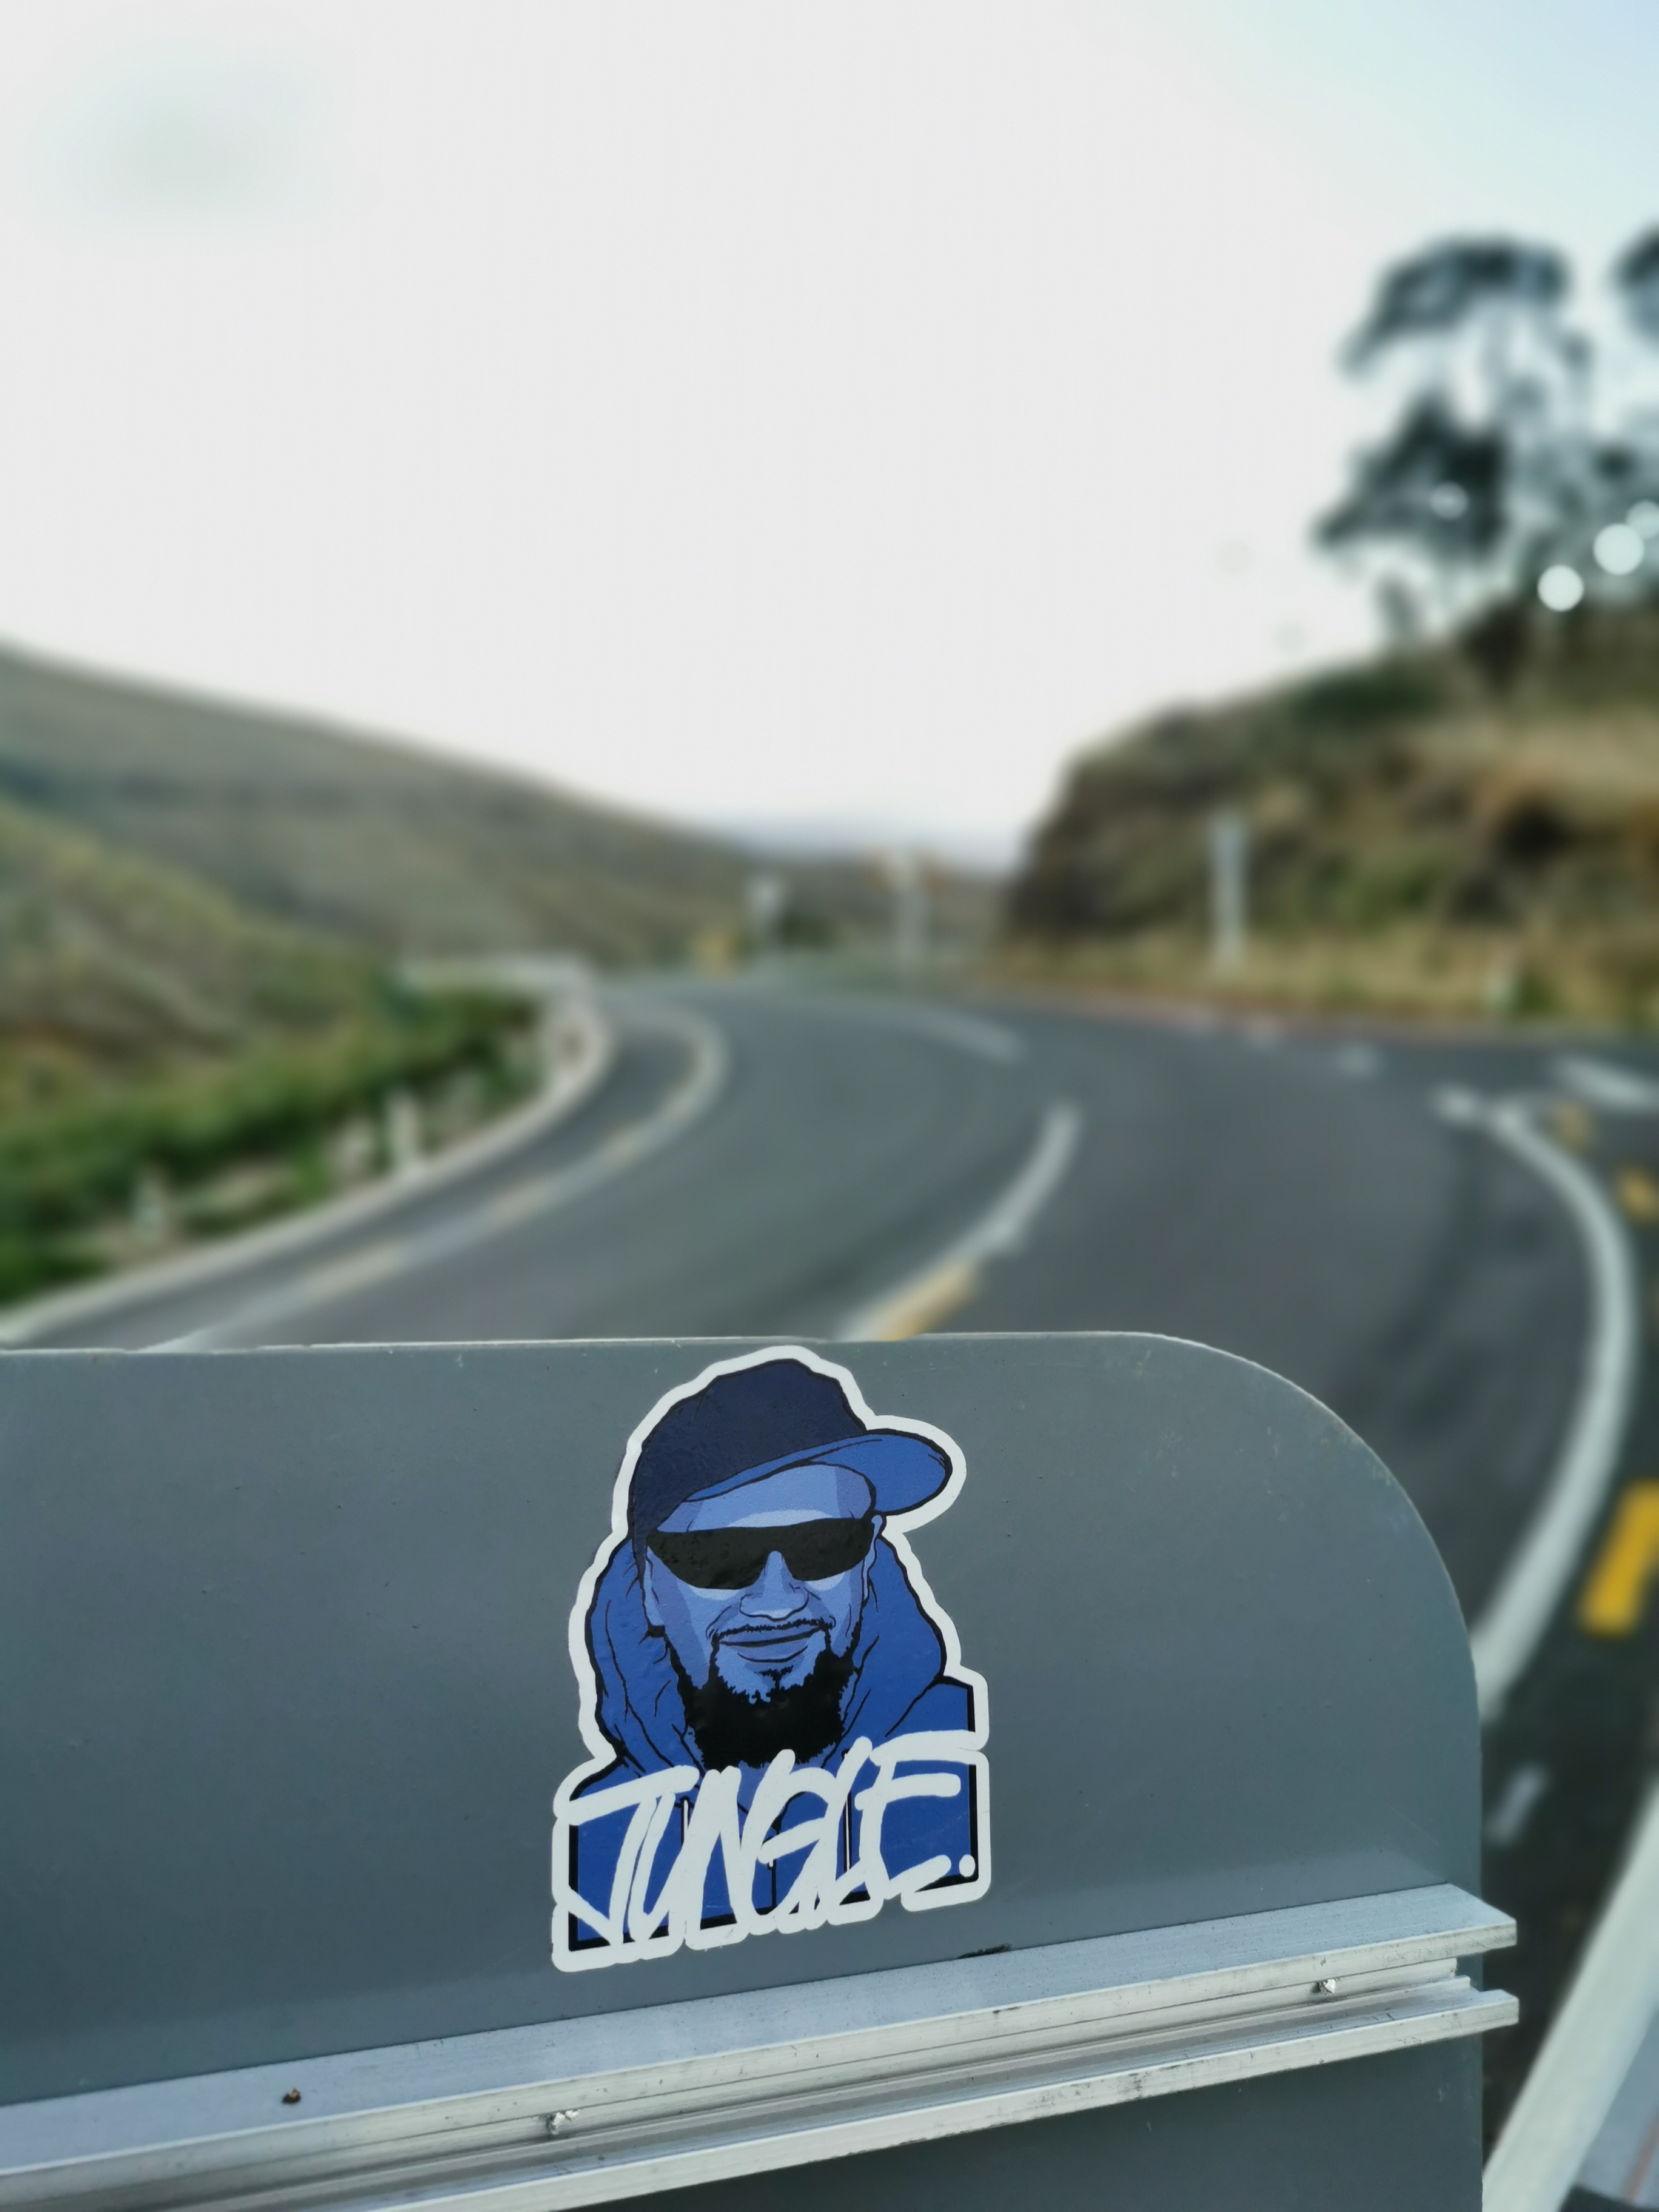 A Jungle tribute sticker on Summit Road, February 2020.